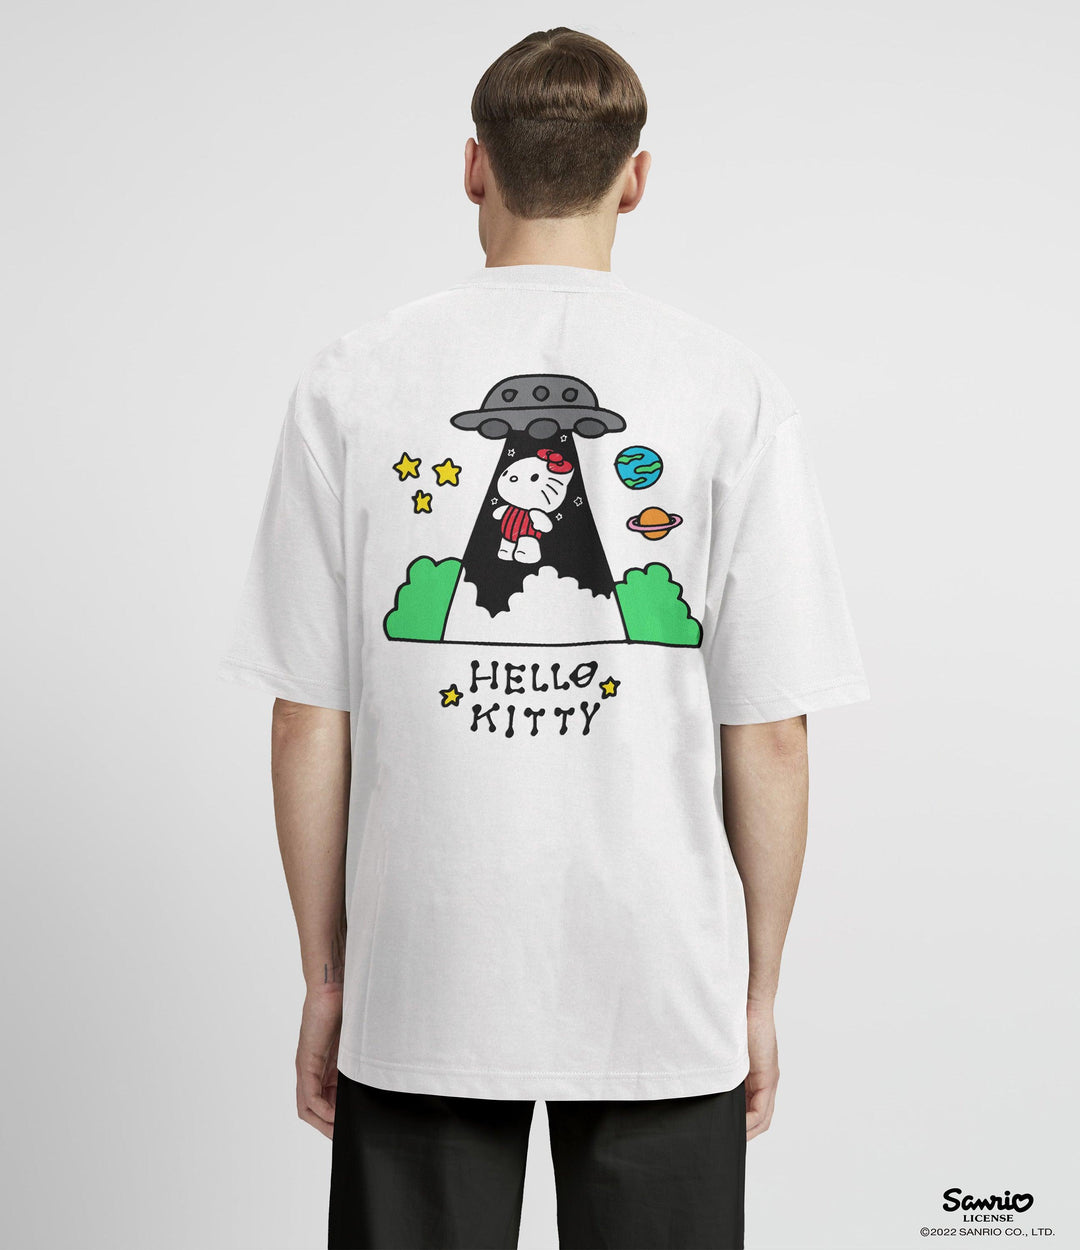 Abduction Hello Kitty Tee at Catori Clothing | Graphic & Anime Tees, Hoodies & Sweatshirts 